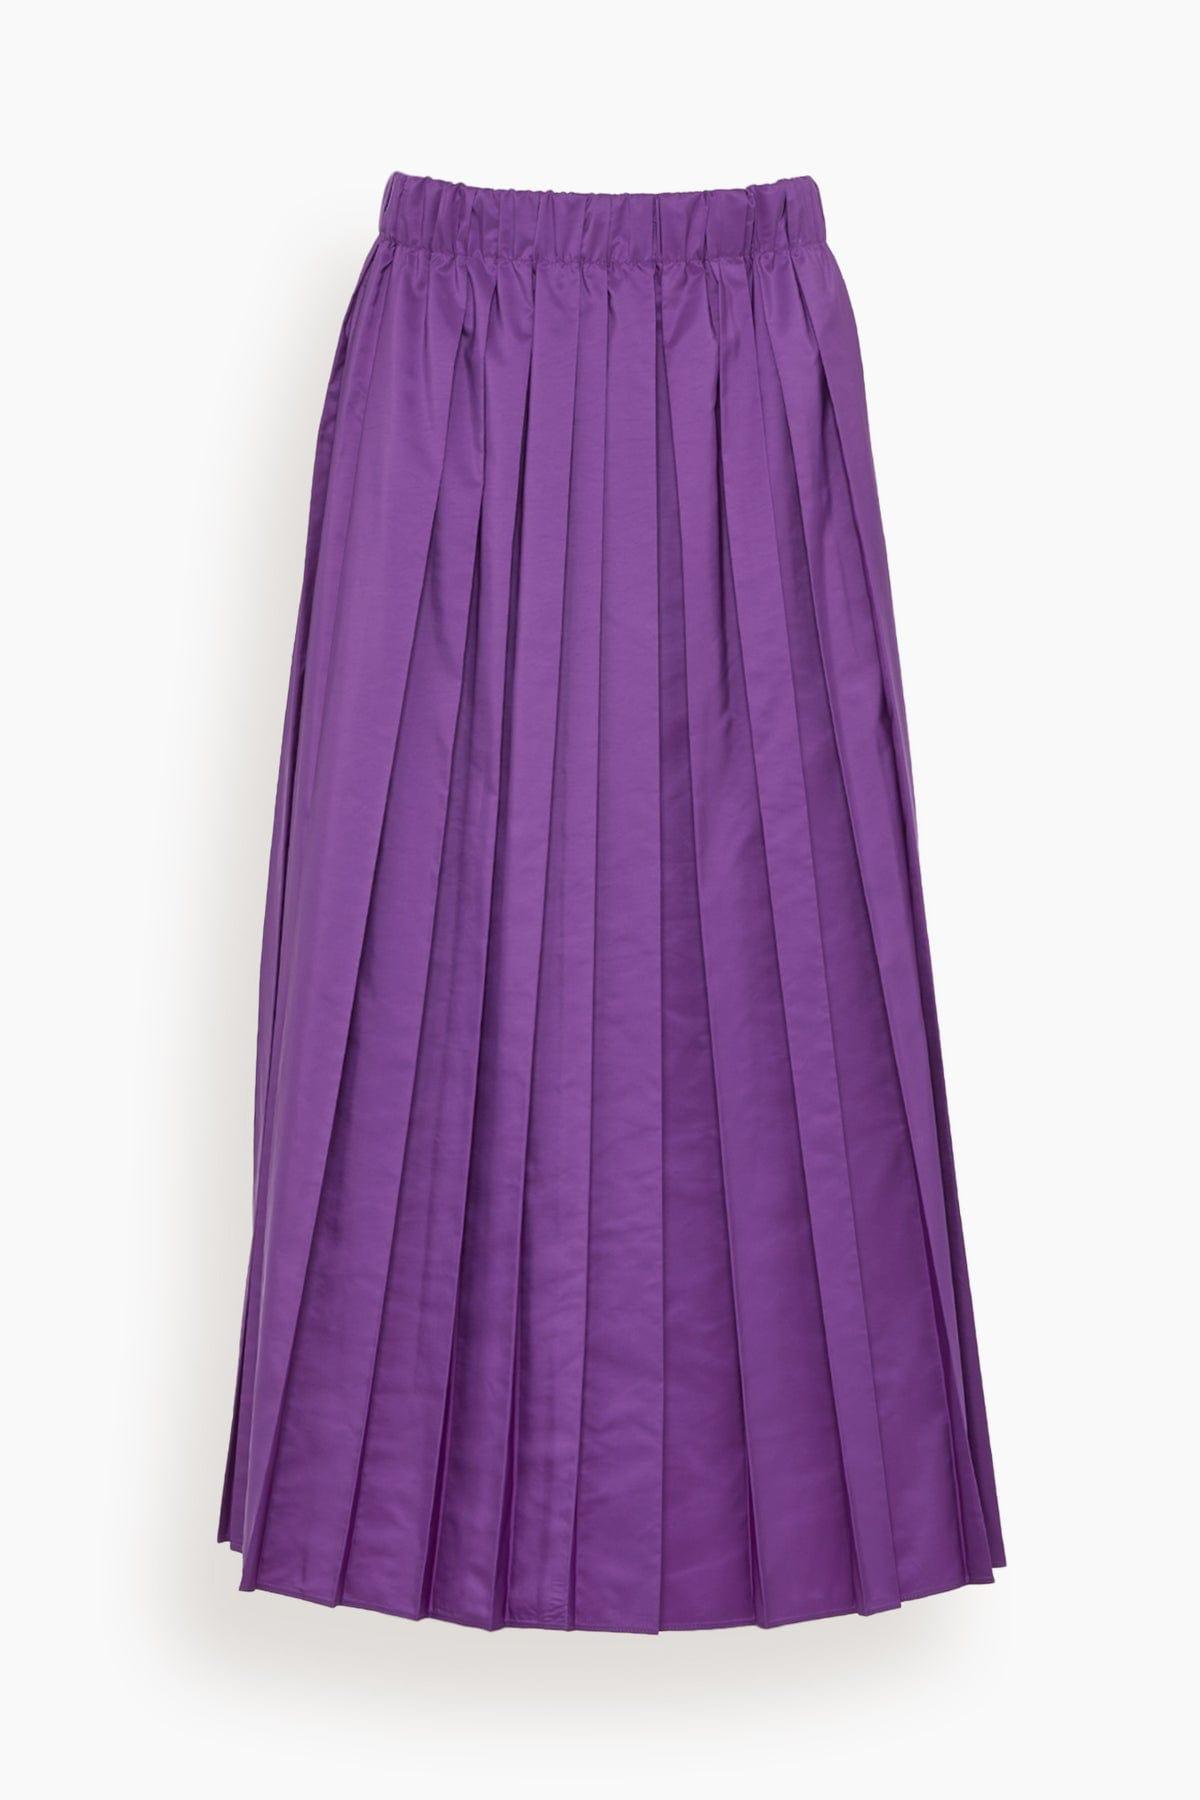 Tibi Italian Sporty Nylon Pleated Pull On Skirt in Purple | Lyst